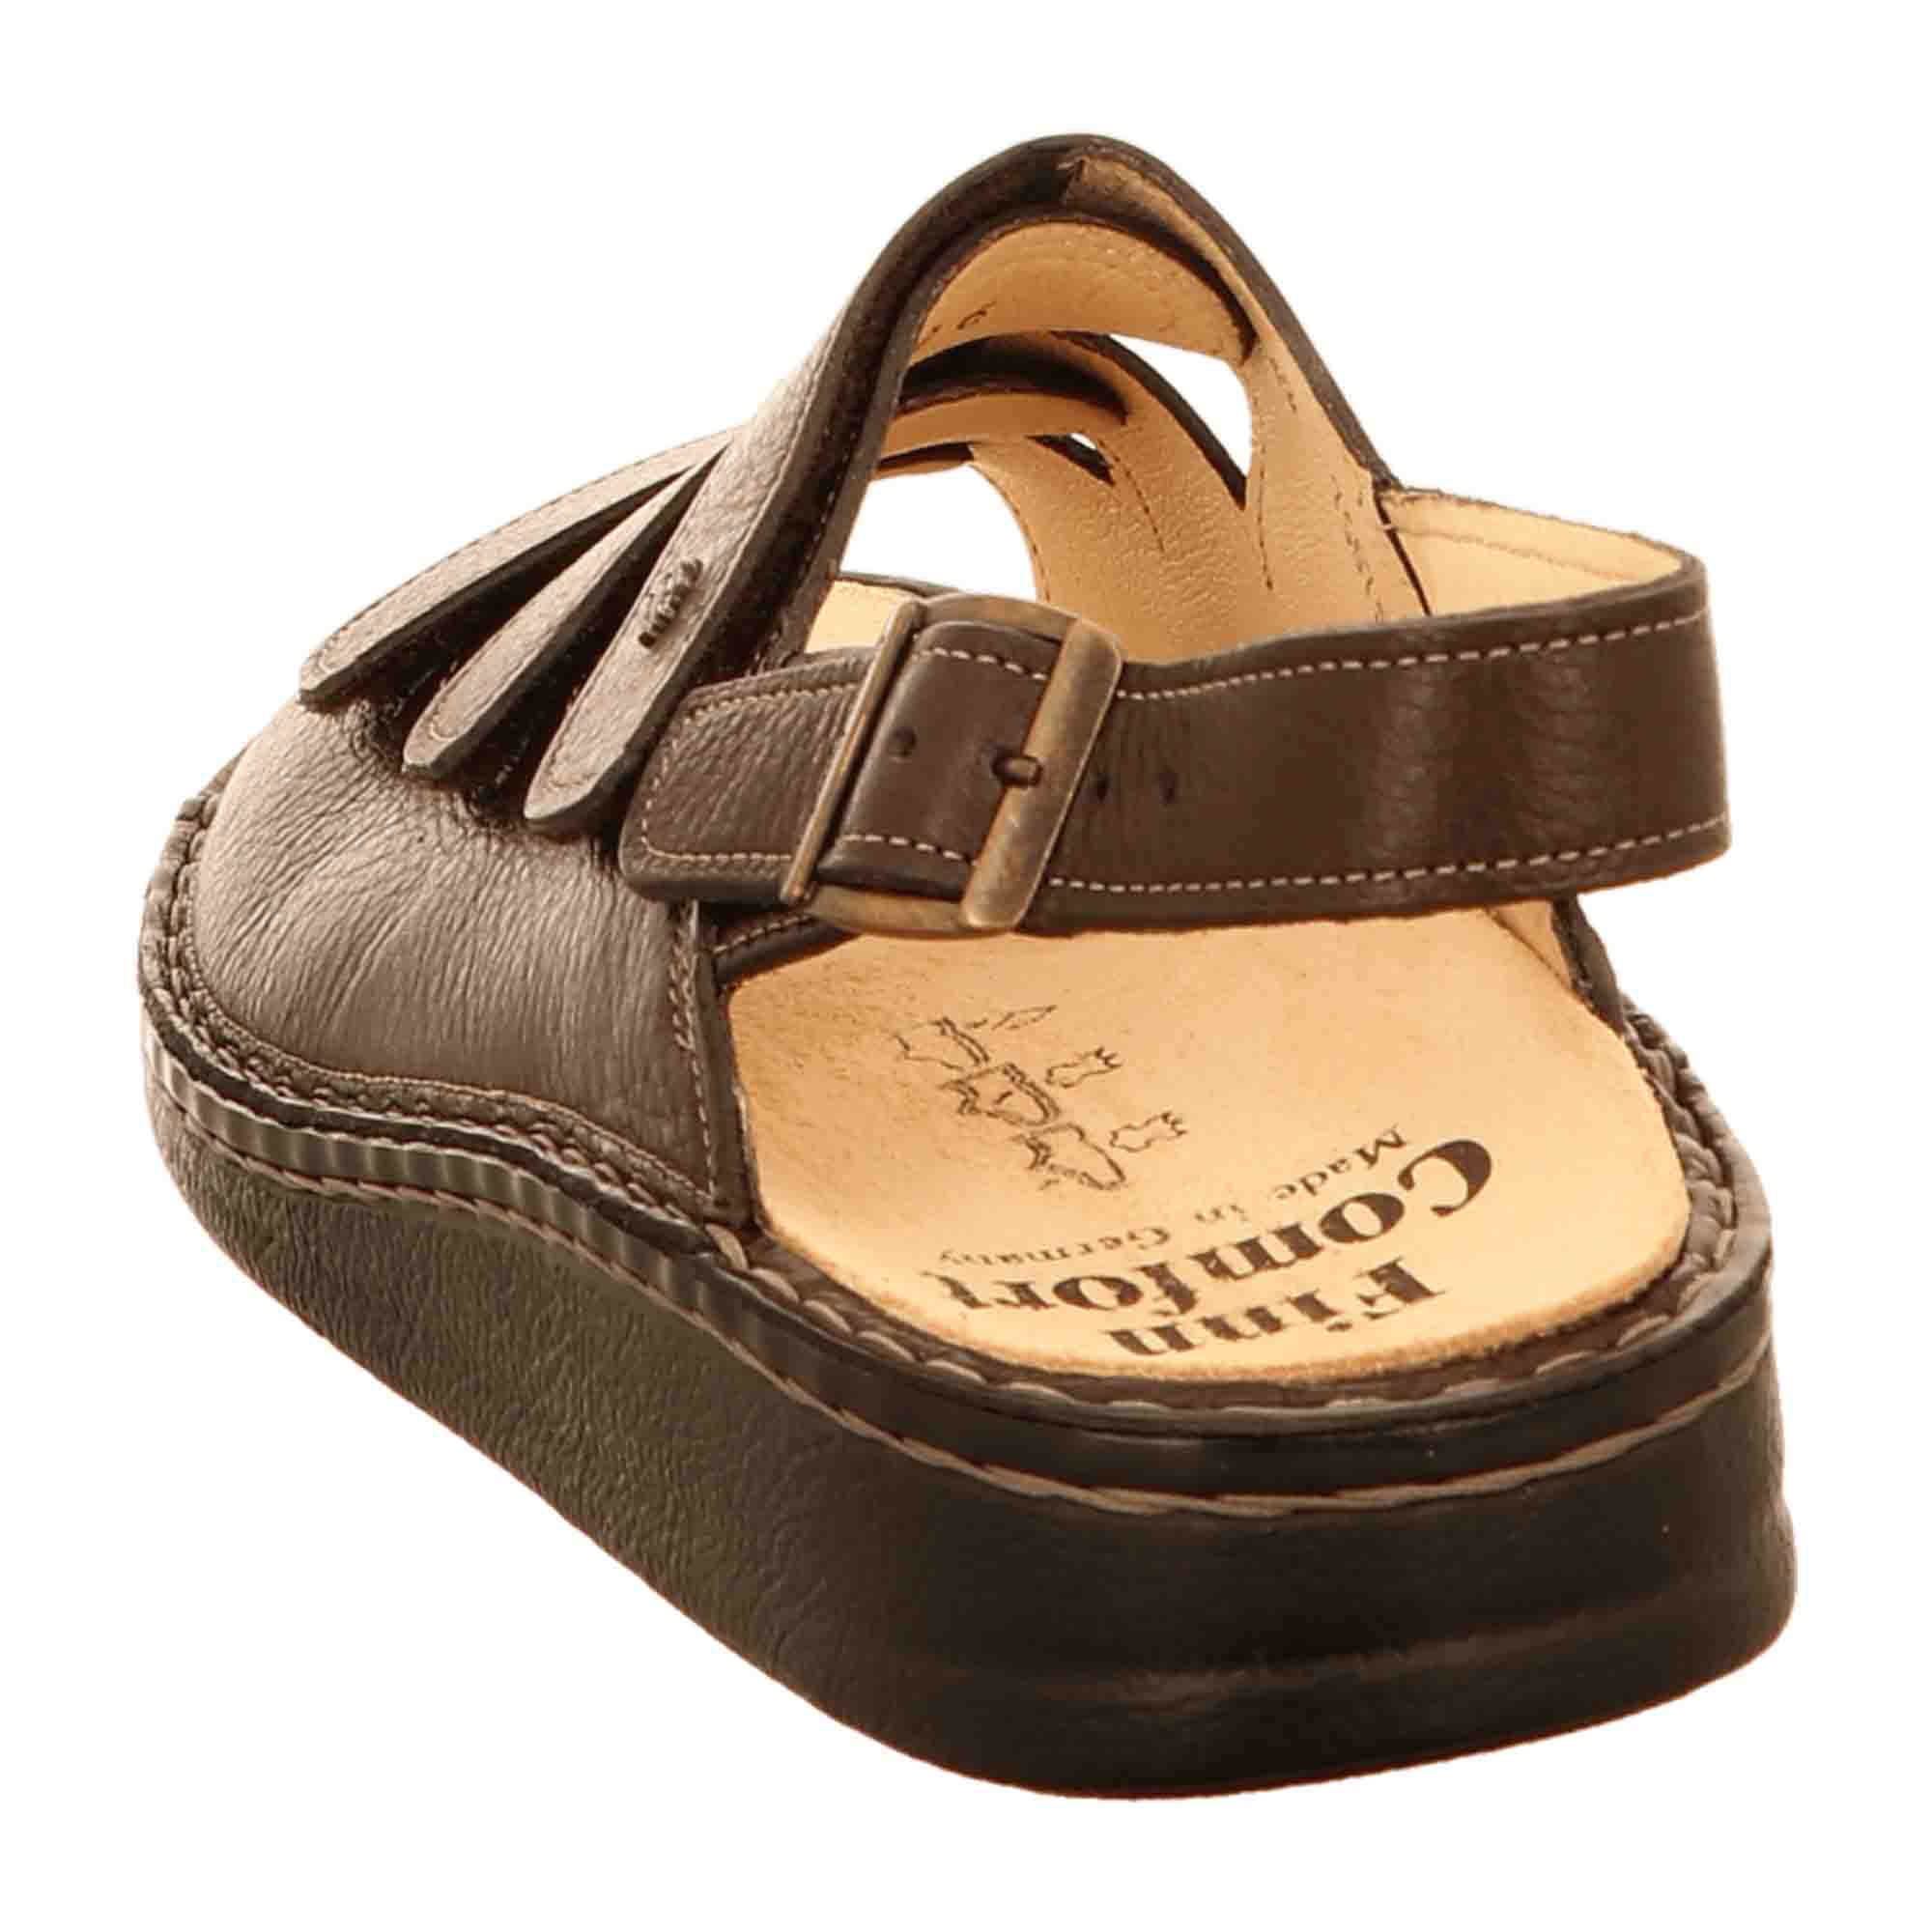 Finn Comfort Sylt Men's Sandals - Durable & Stylish in Brown